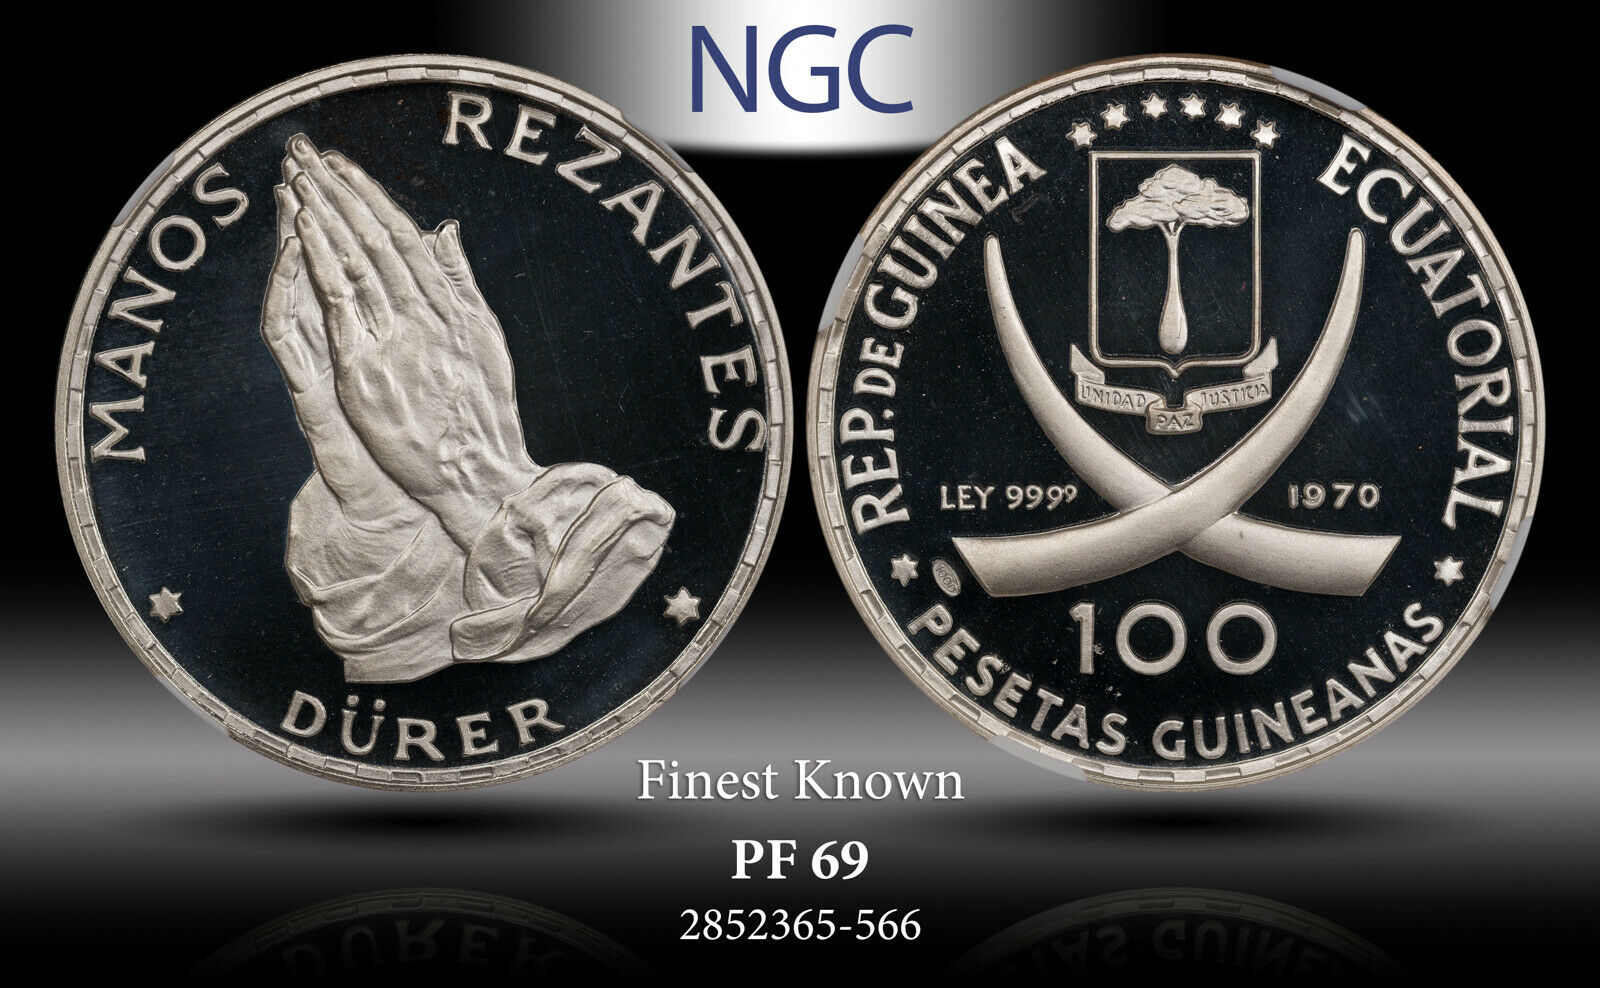 1970 Eq. Guinea Silver 100 Pesteas "durer's Praying Hands" Ngc Pf69 Finest Known